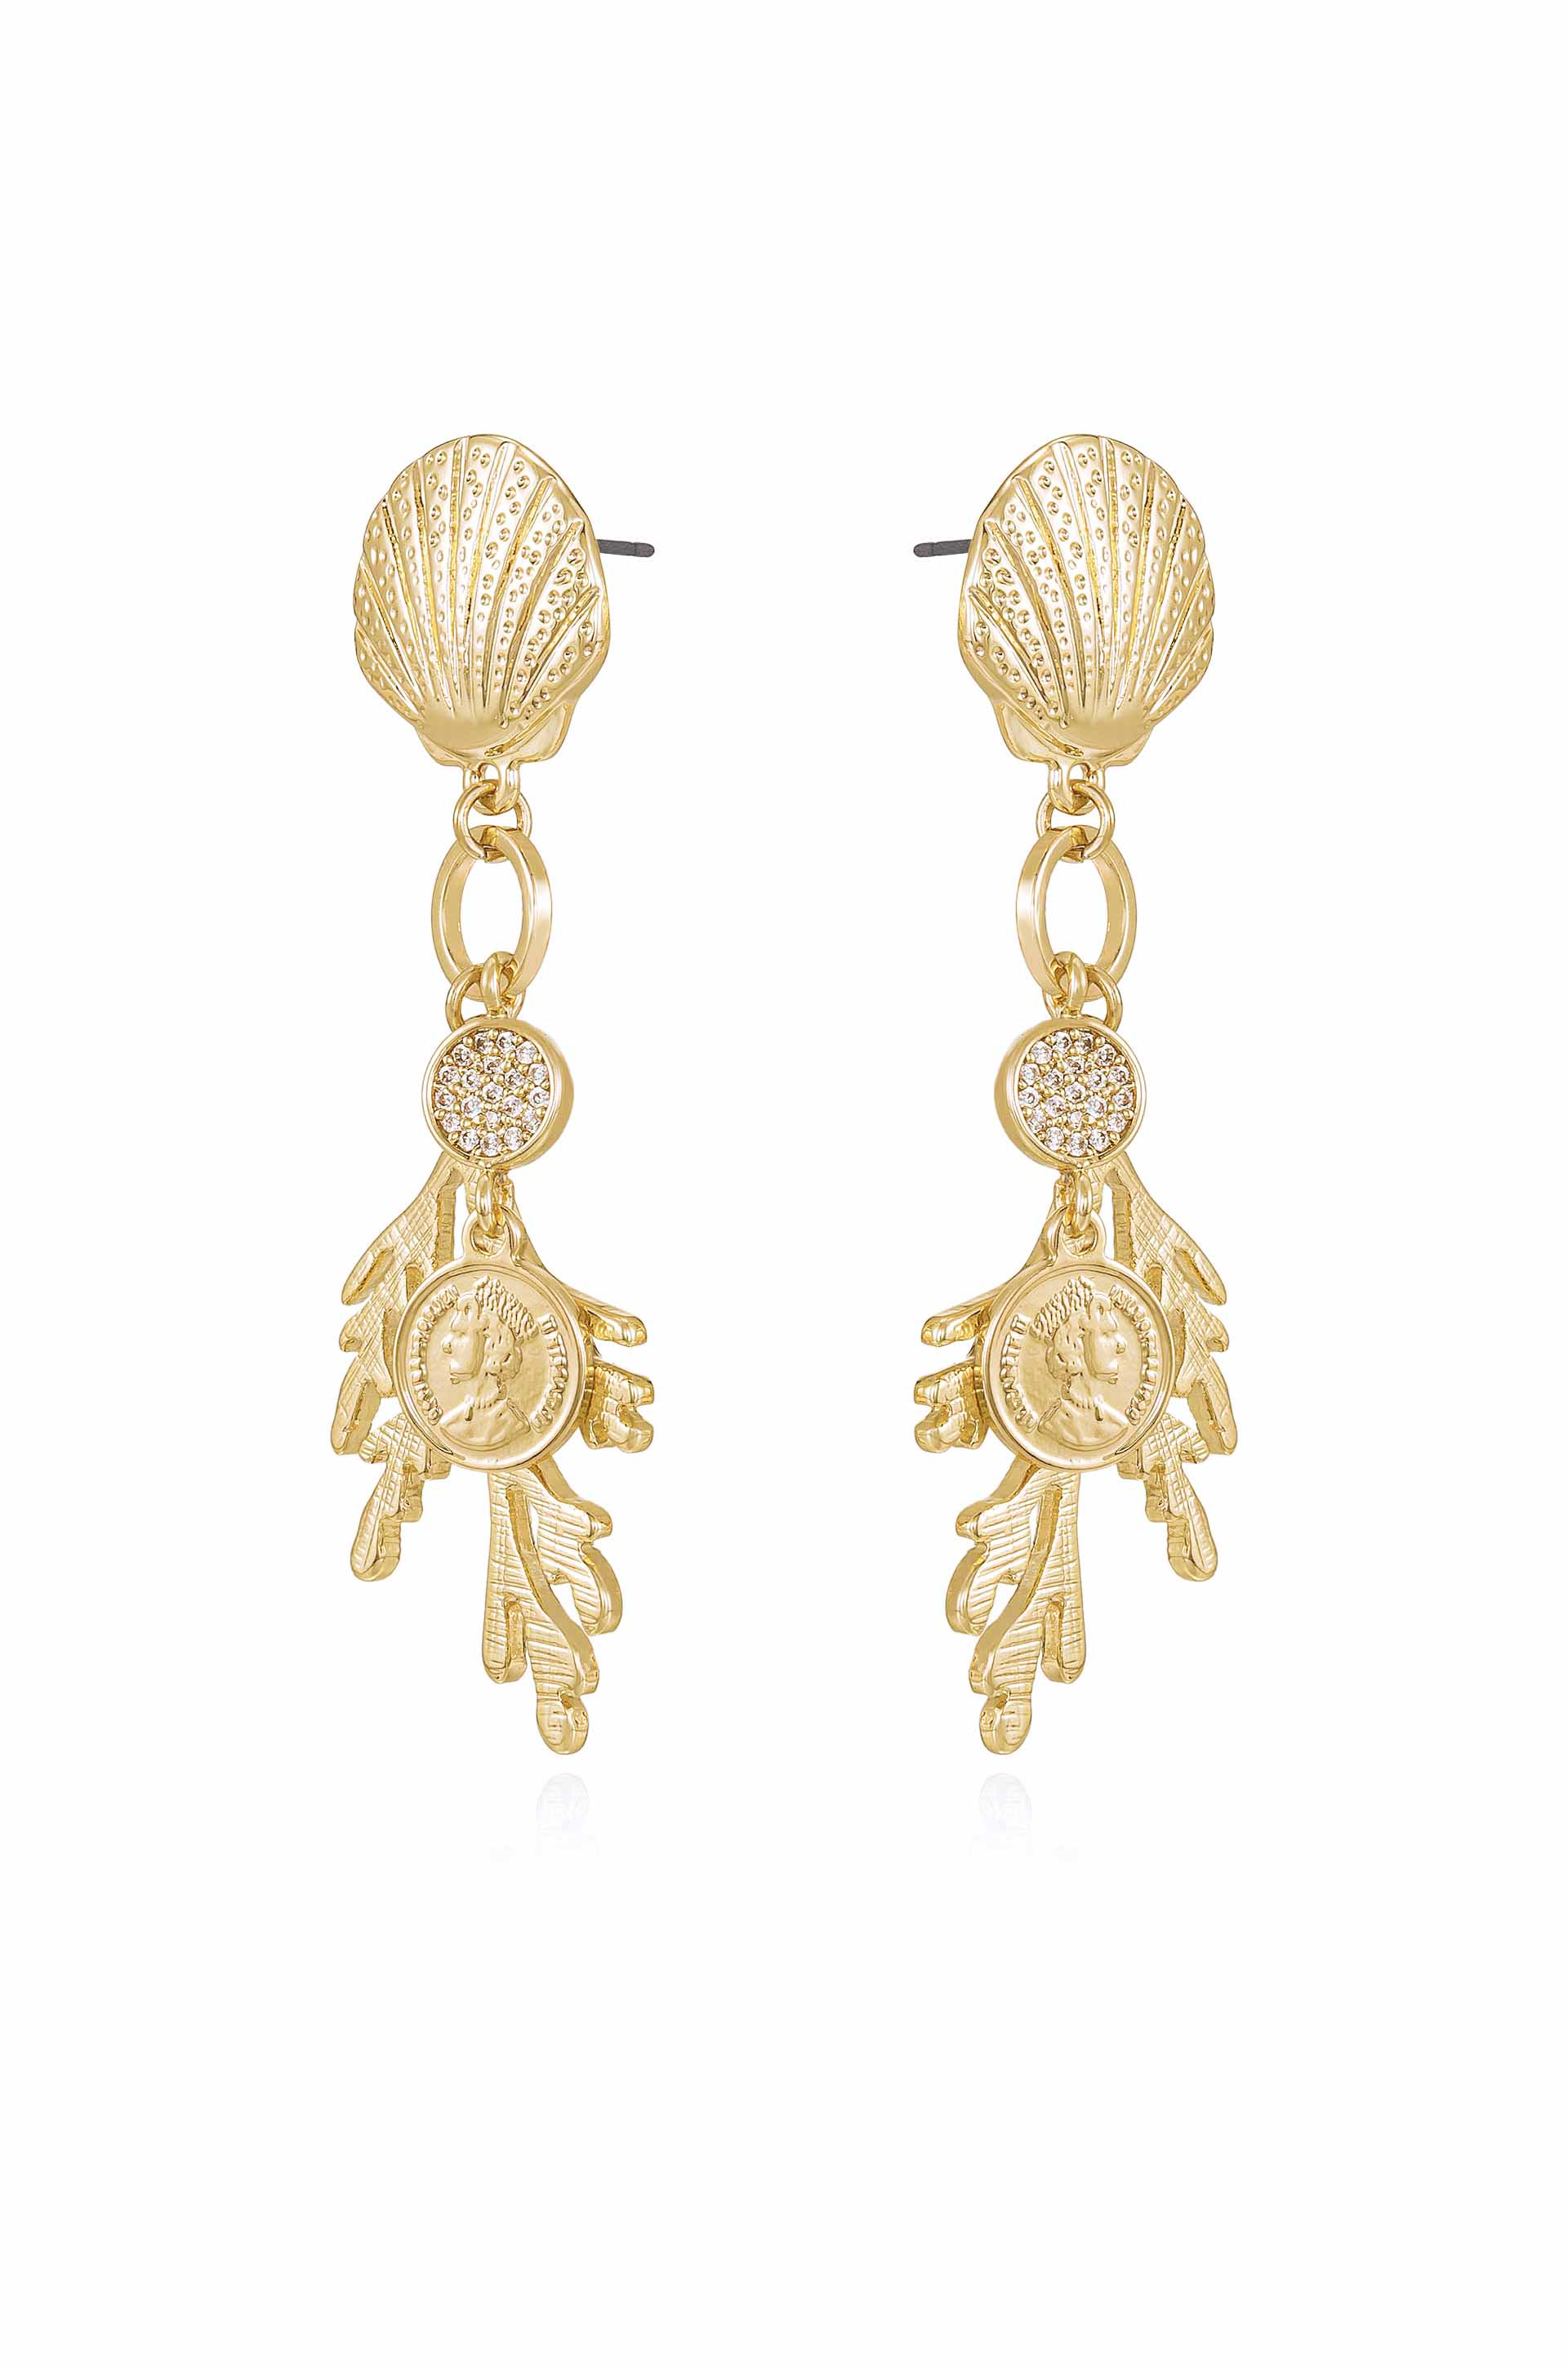 Seaside Shell & Coral 18k Gold Plated Earrings side